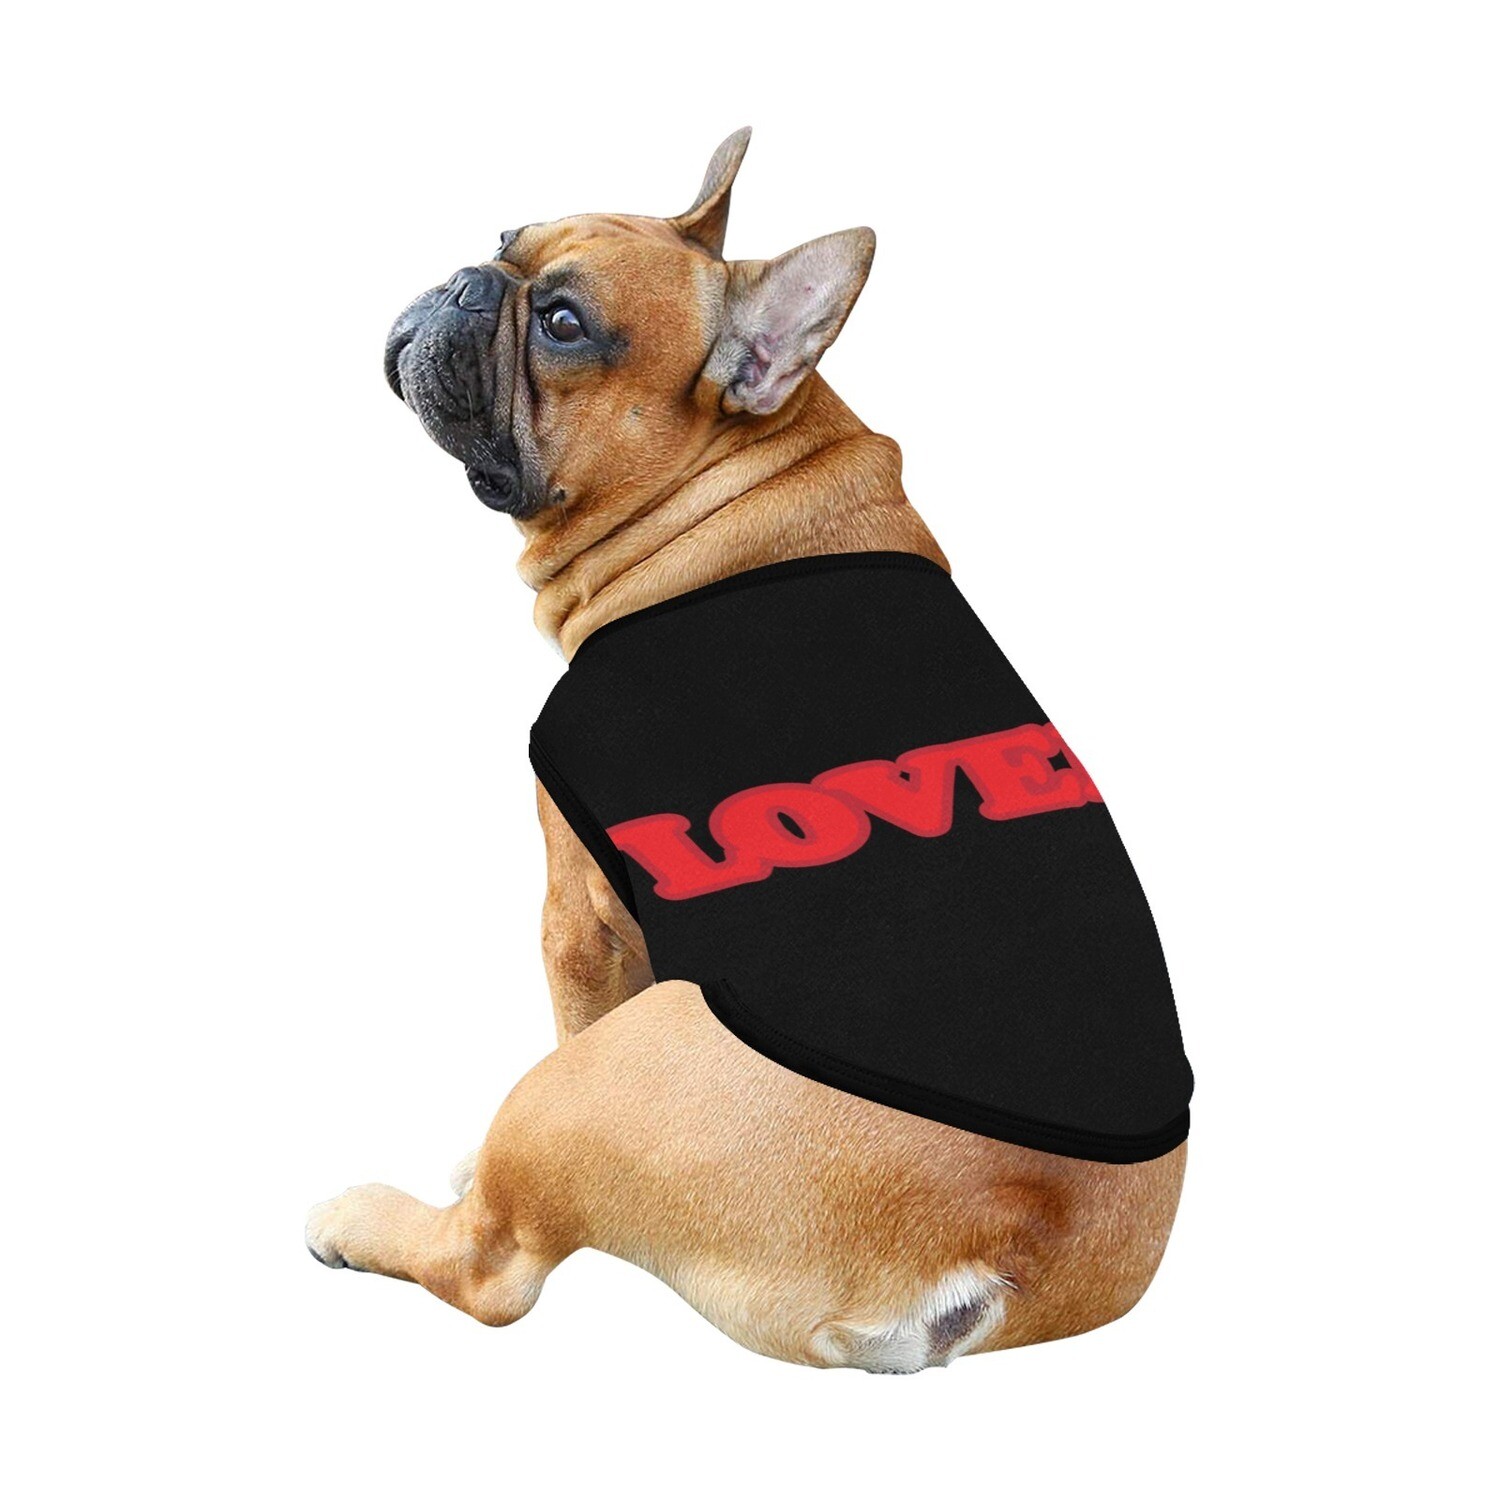 🐕 David Rose LOVER Dog t-shirt, Dog Tank Top, Dog shirt, Dog clothes, Gifts, front back print, 7 sizes XS to 3XL, Schitt's Creek, TV series